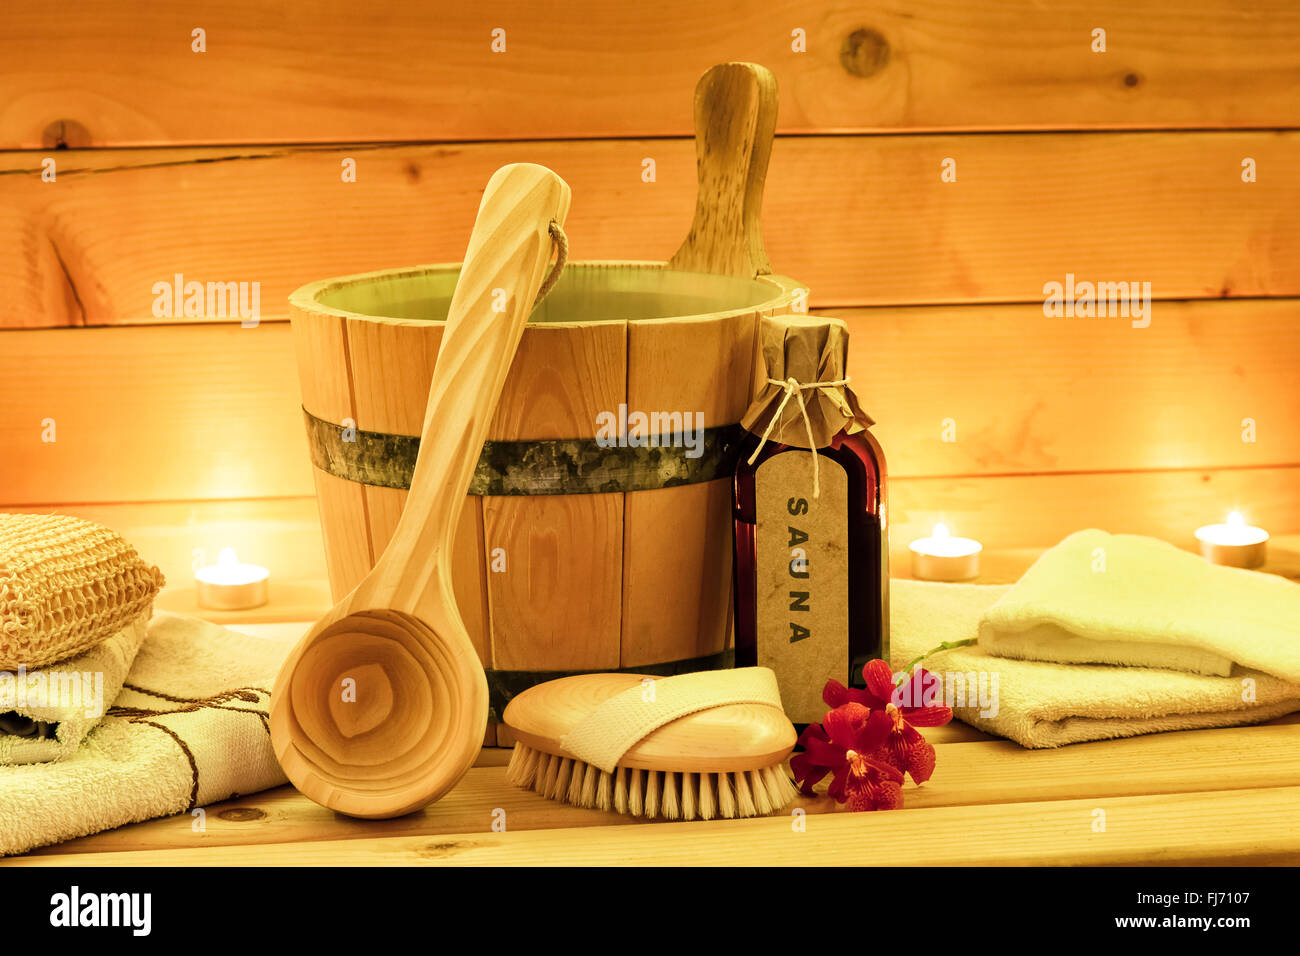 Sauna accessories with sauna oil, wooden bucket, ladle, towels Stock Photo